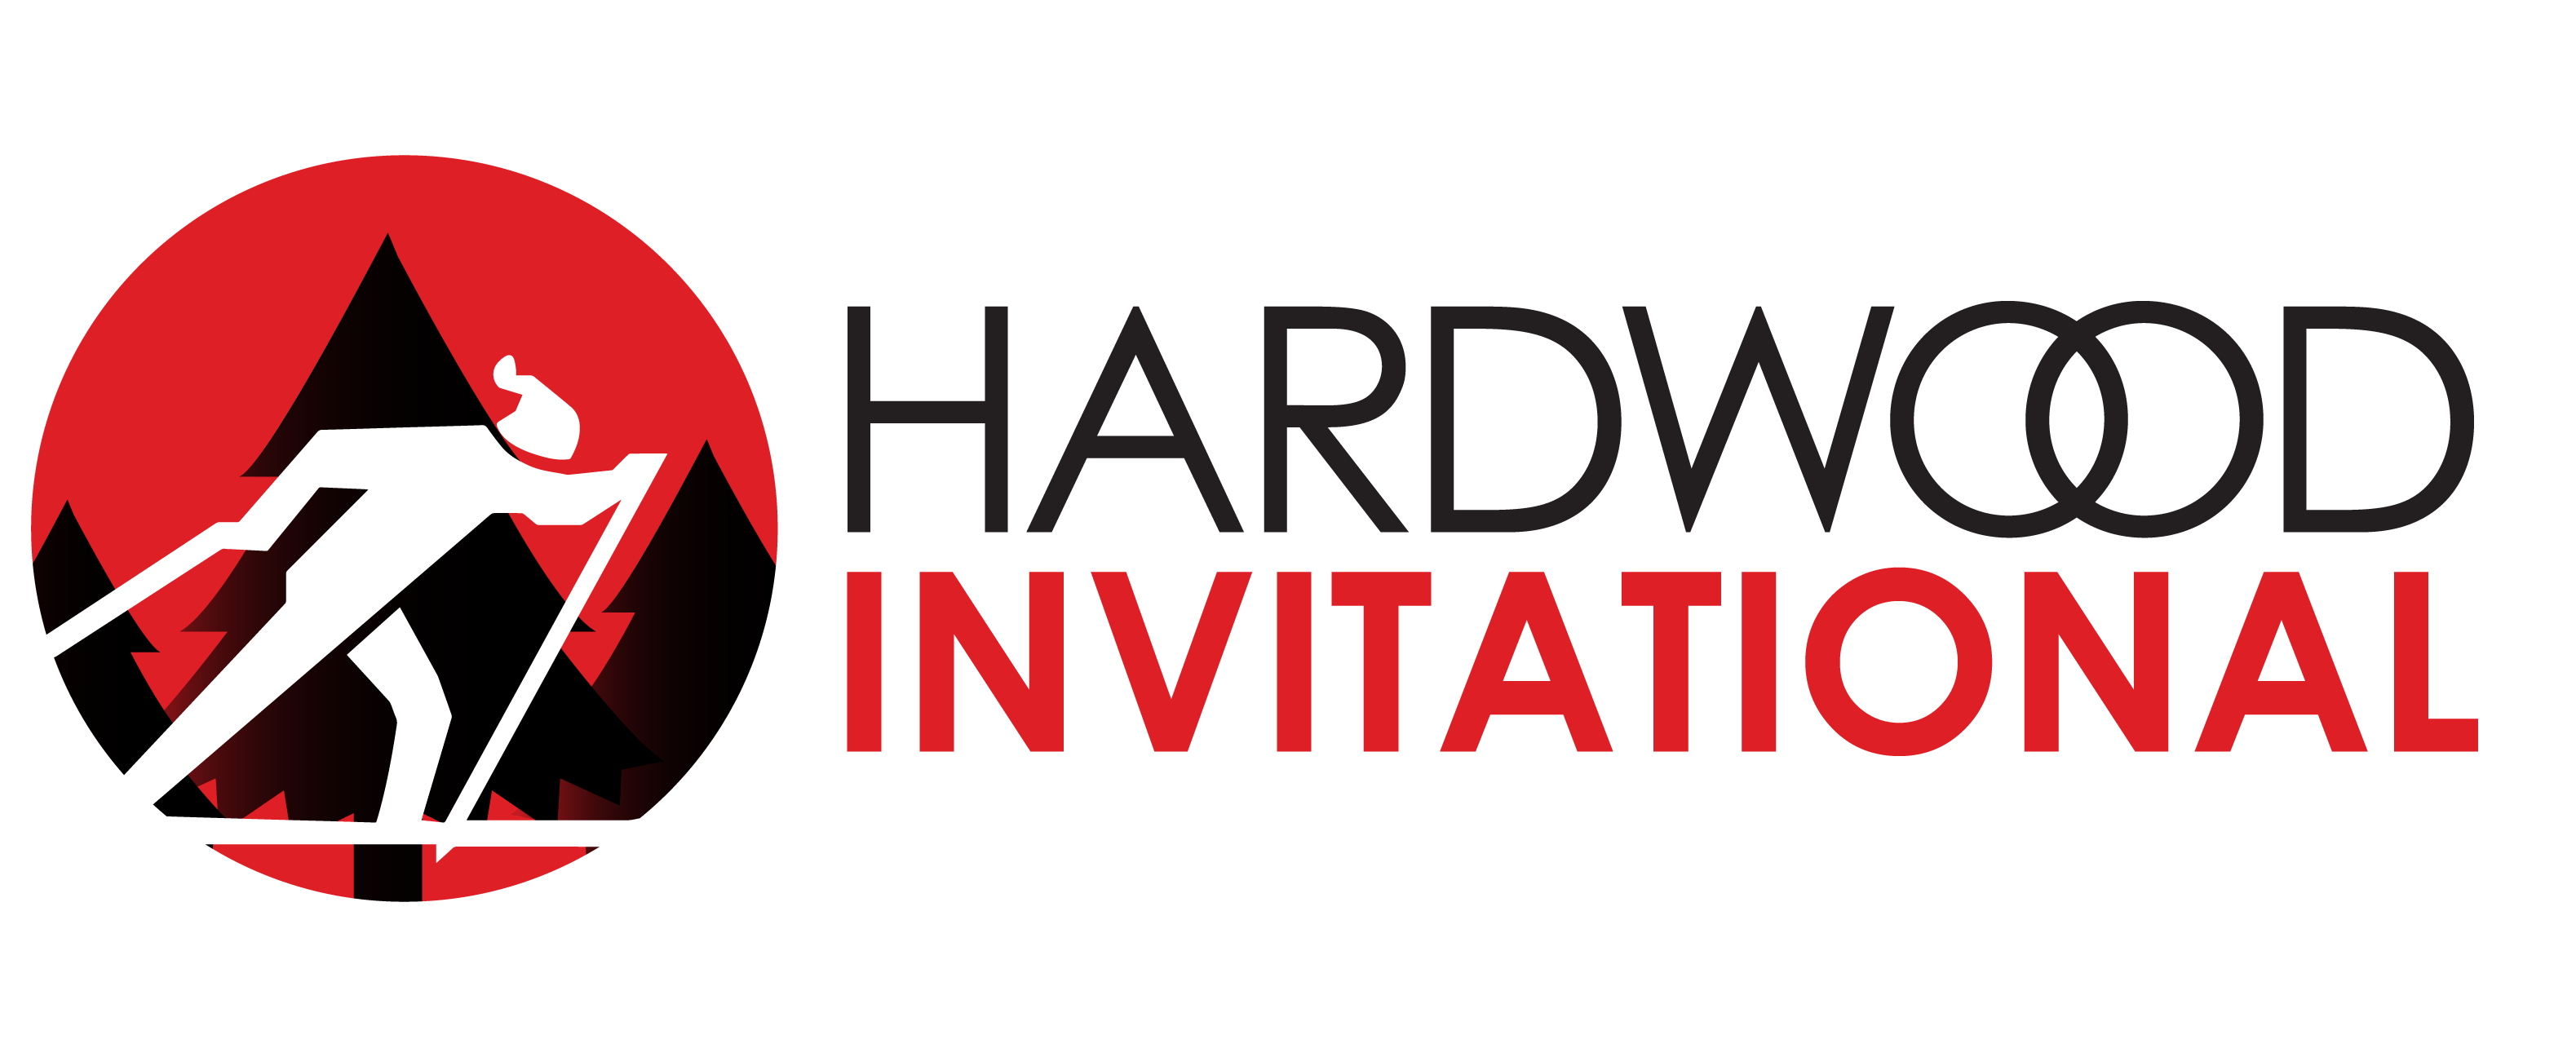 Hardwood Nordic Invitational - December 2022